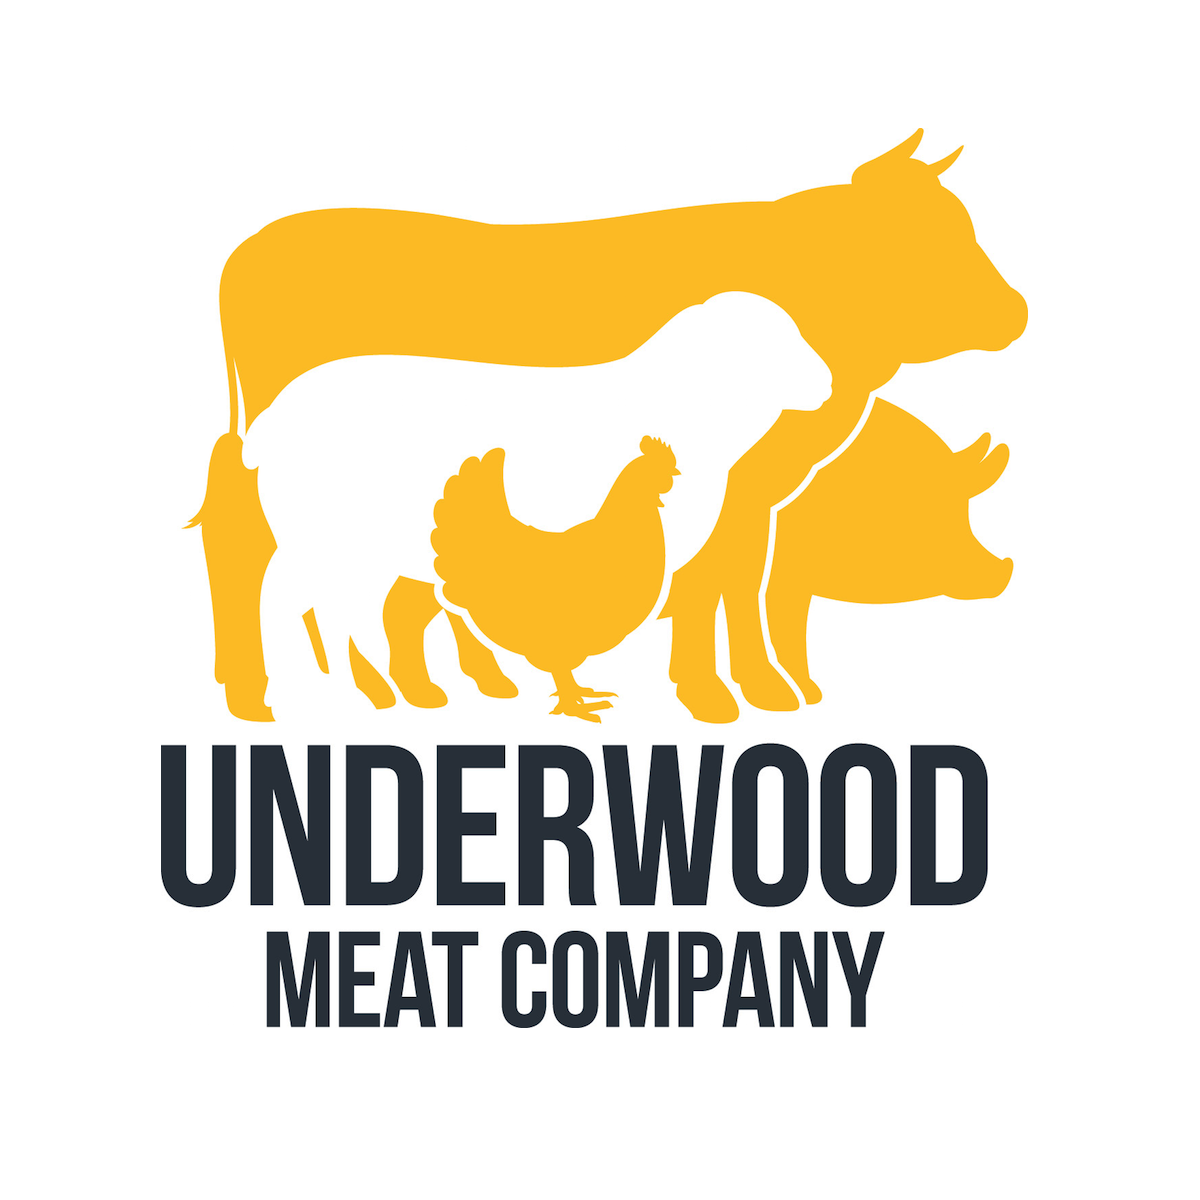 Underwood Meat Company brand logo